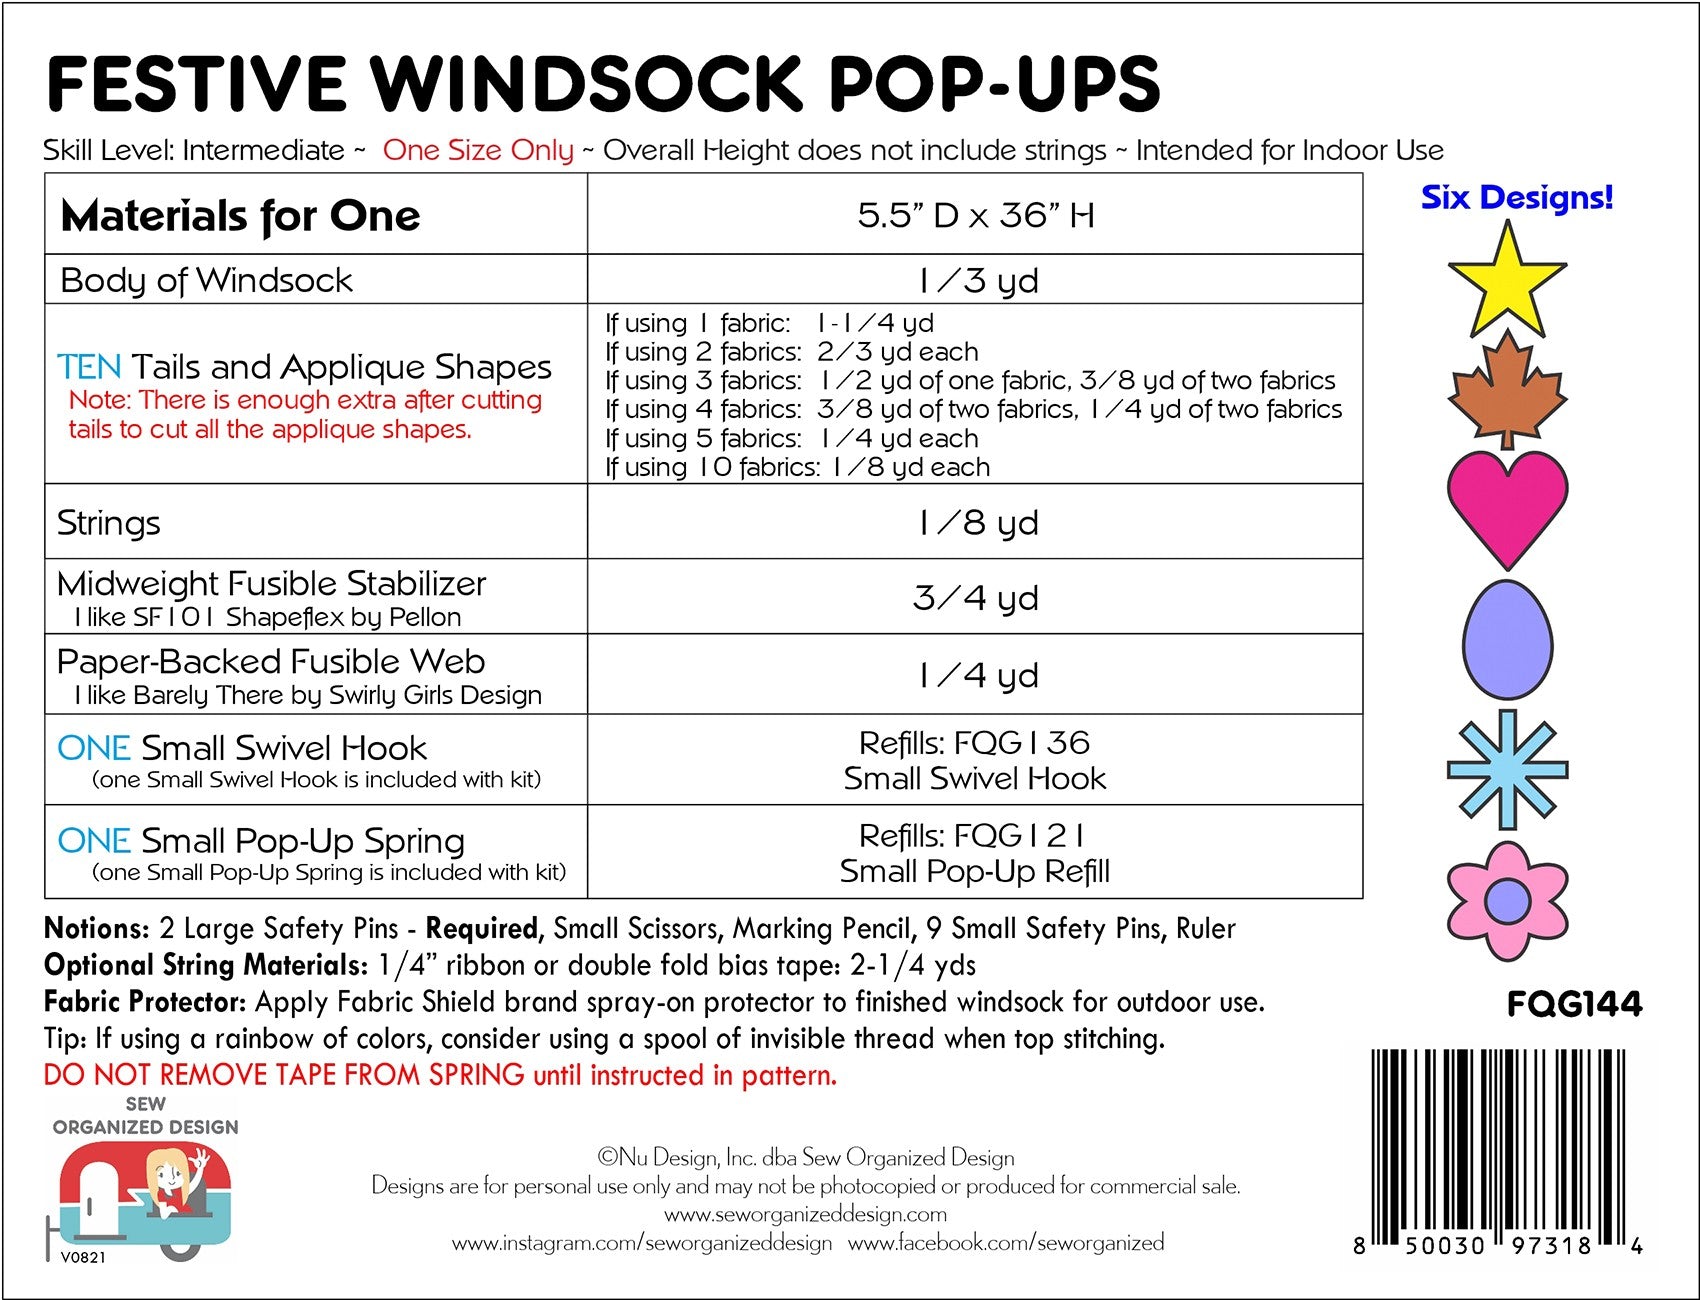 Festive Windsock Pop Ups Kit from Sew Organized Design